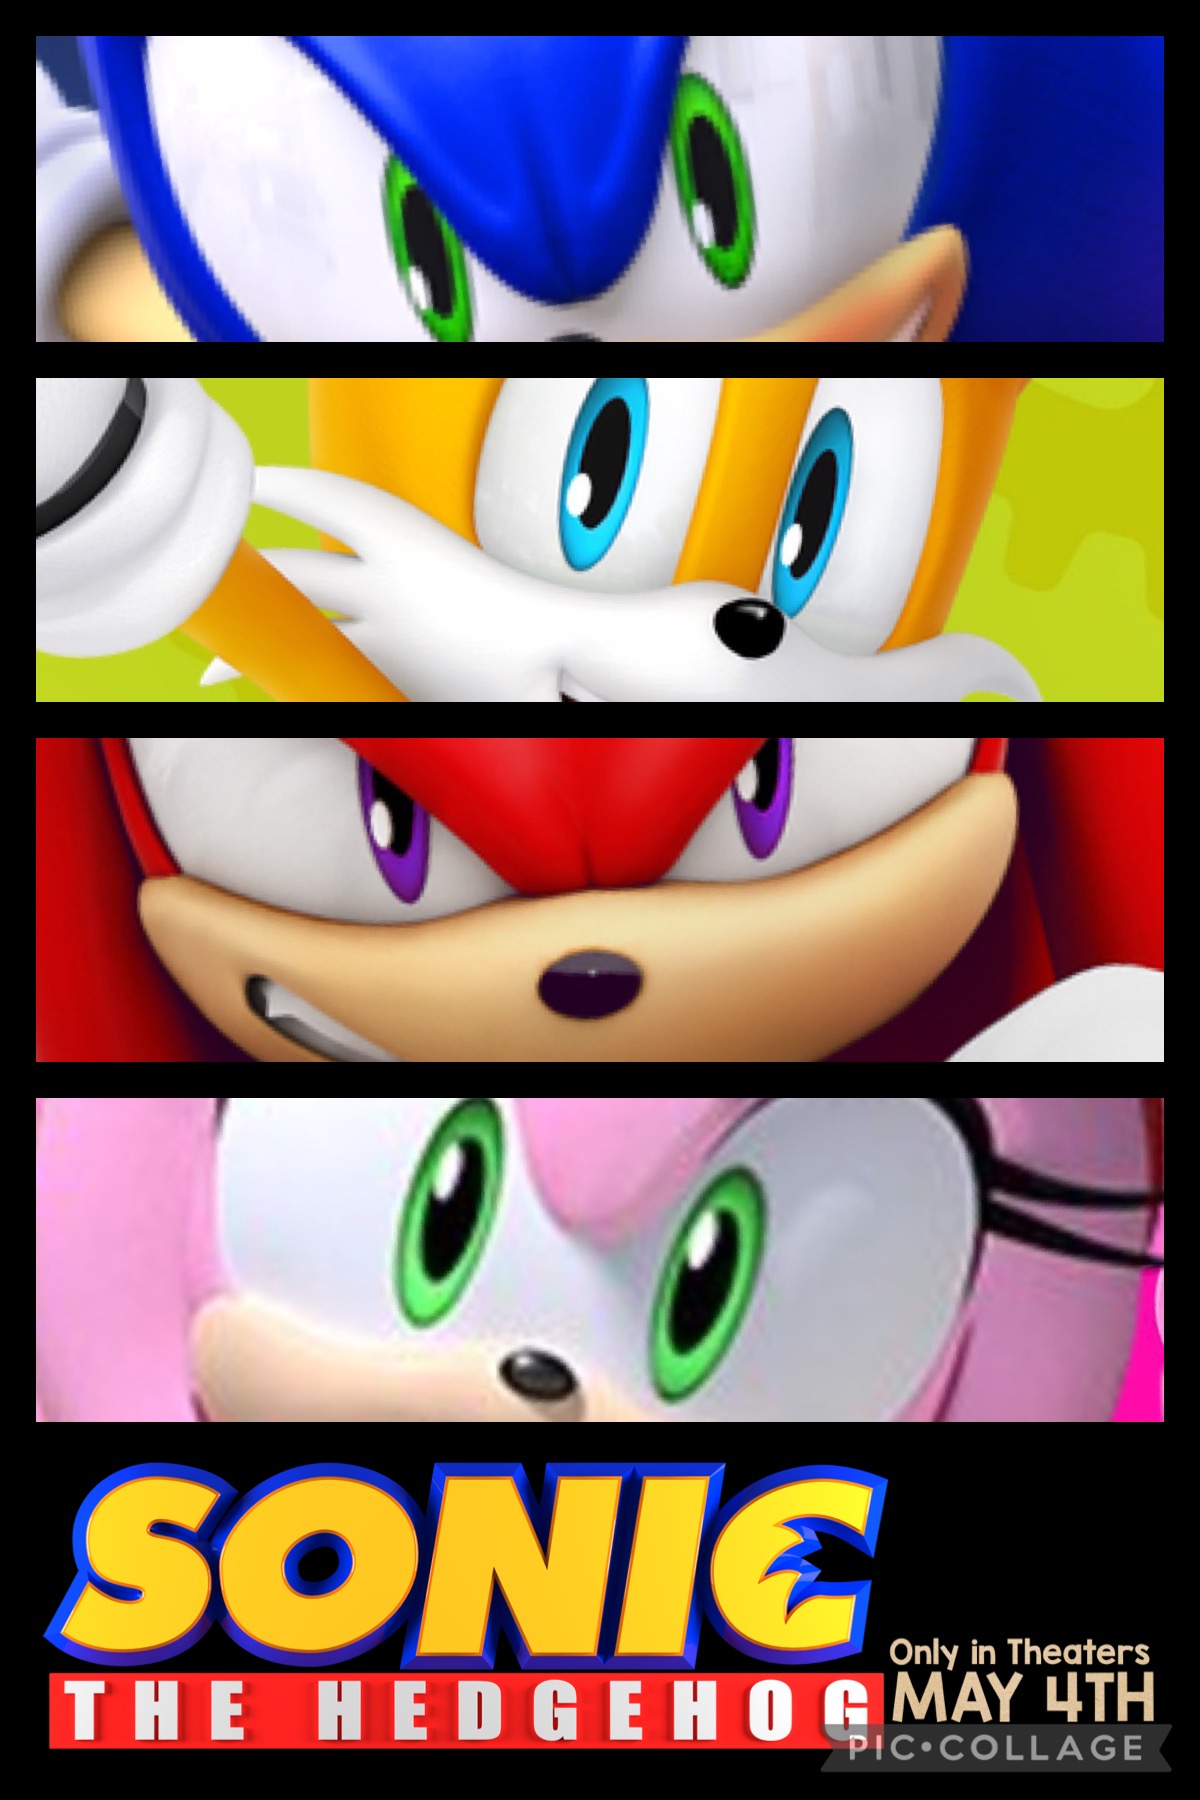 Sonic the Hedgehog 3 (2024) - Full Trailer Concept